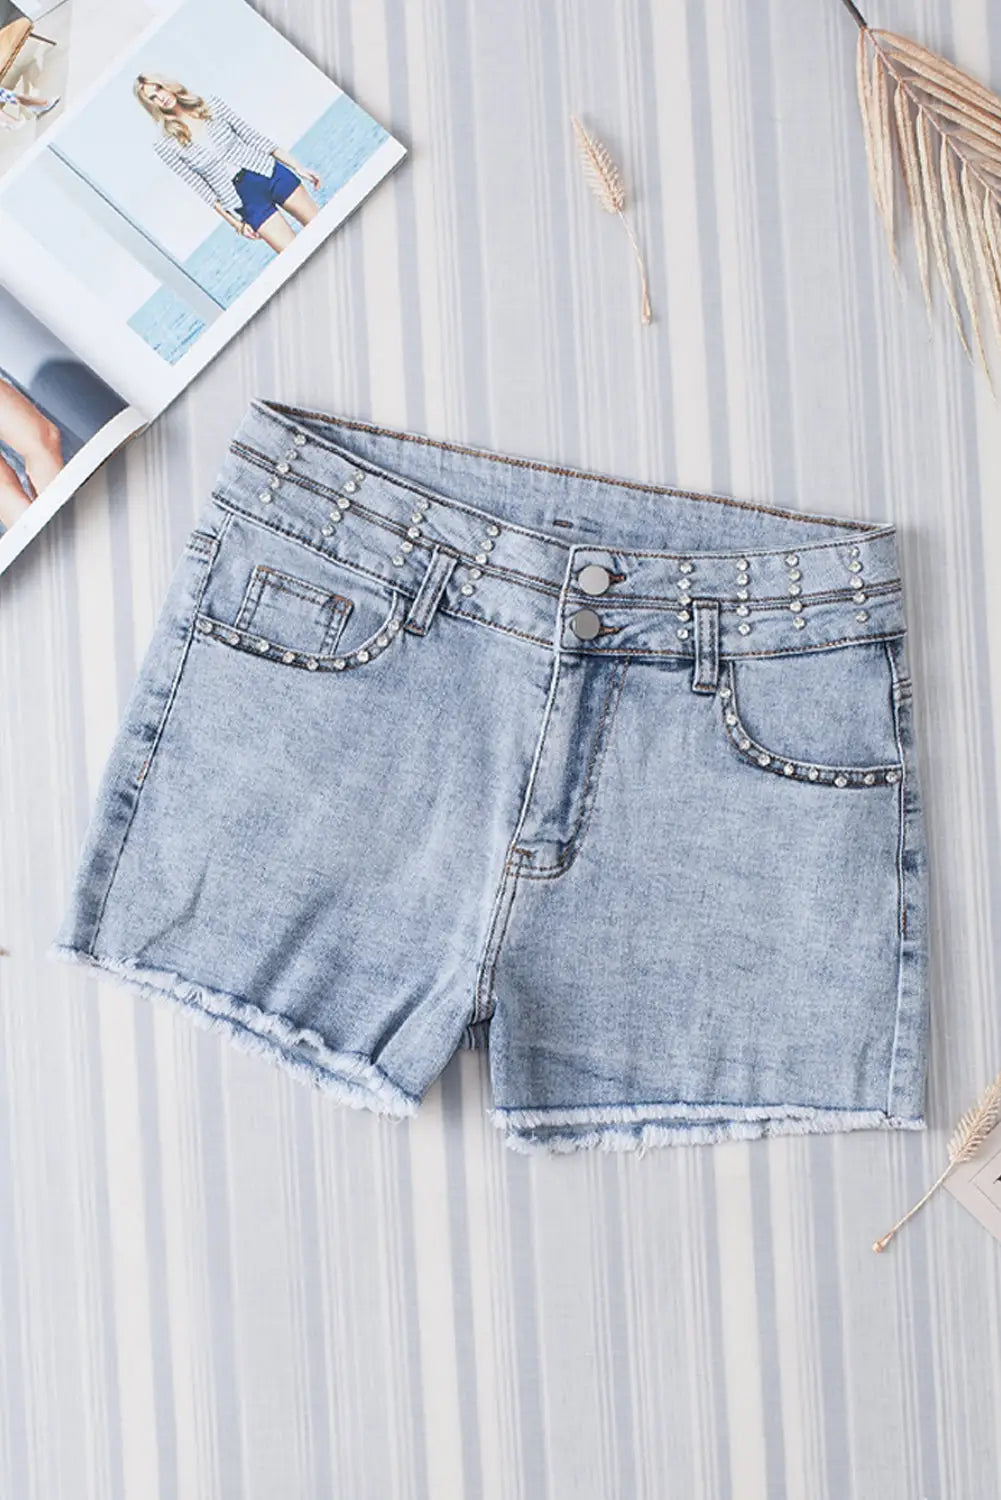 Vintage wash denim shorts - bottoms/denim